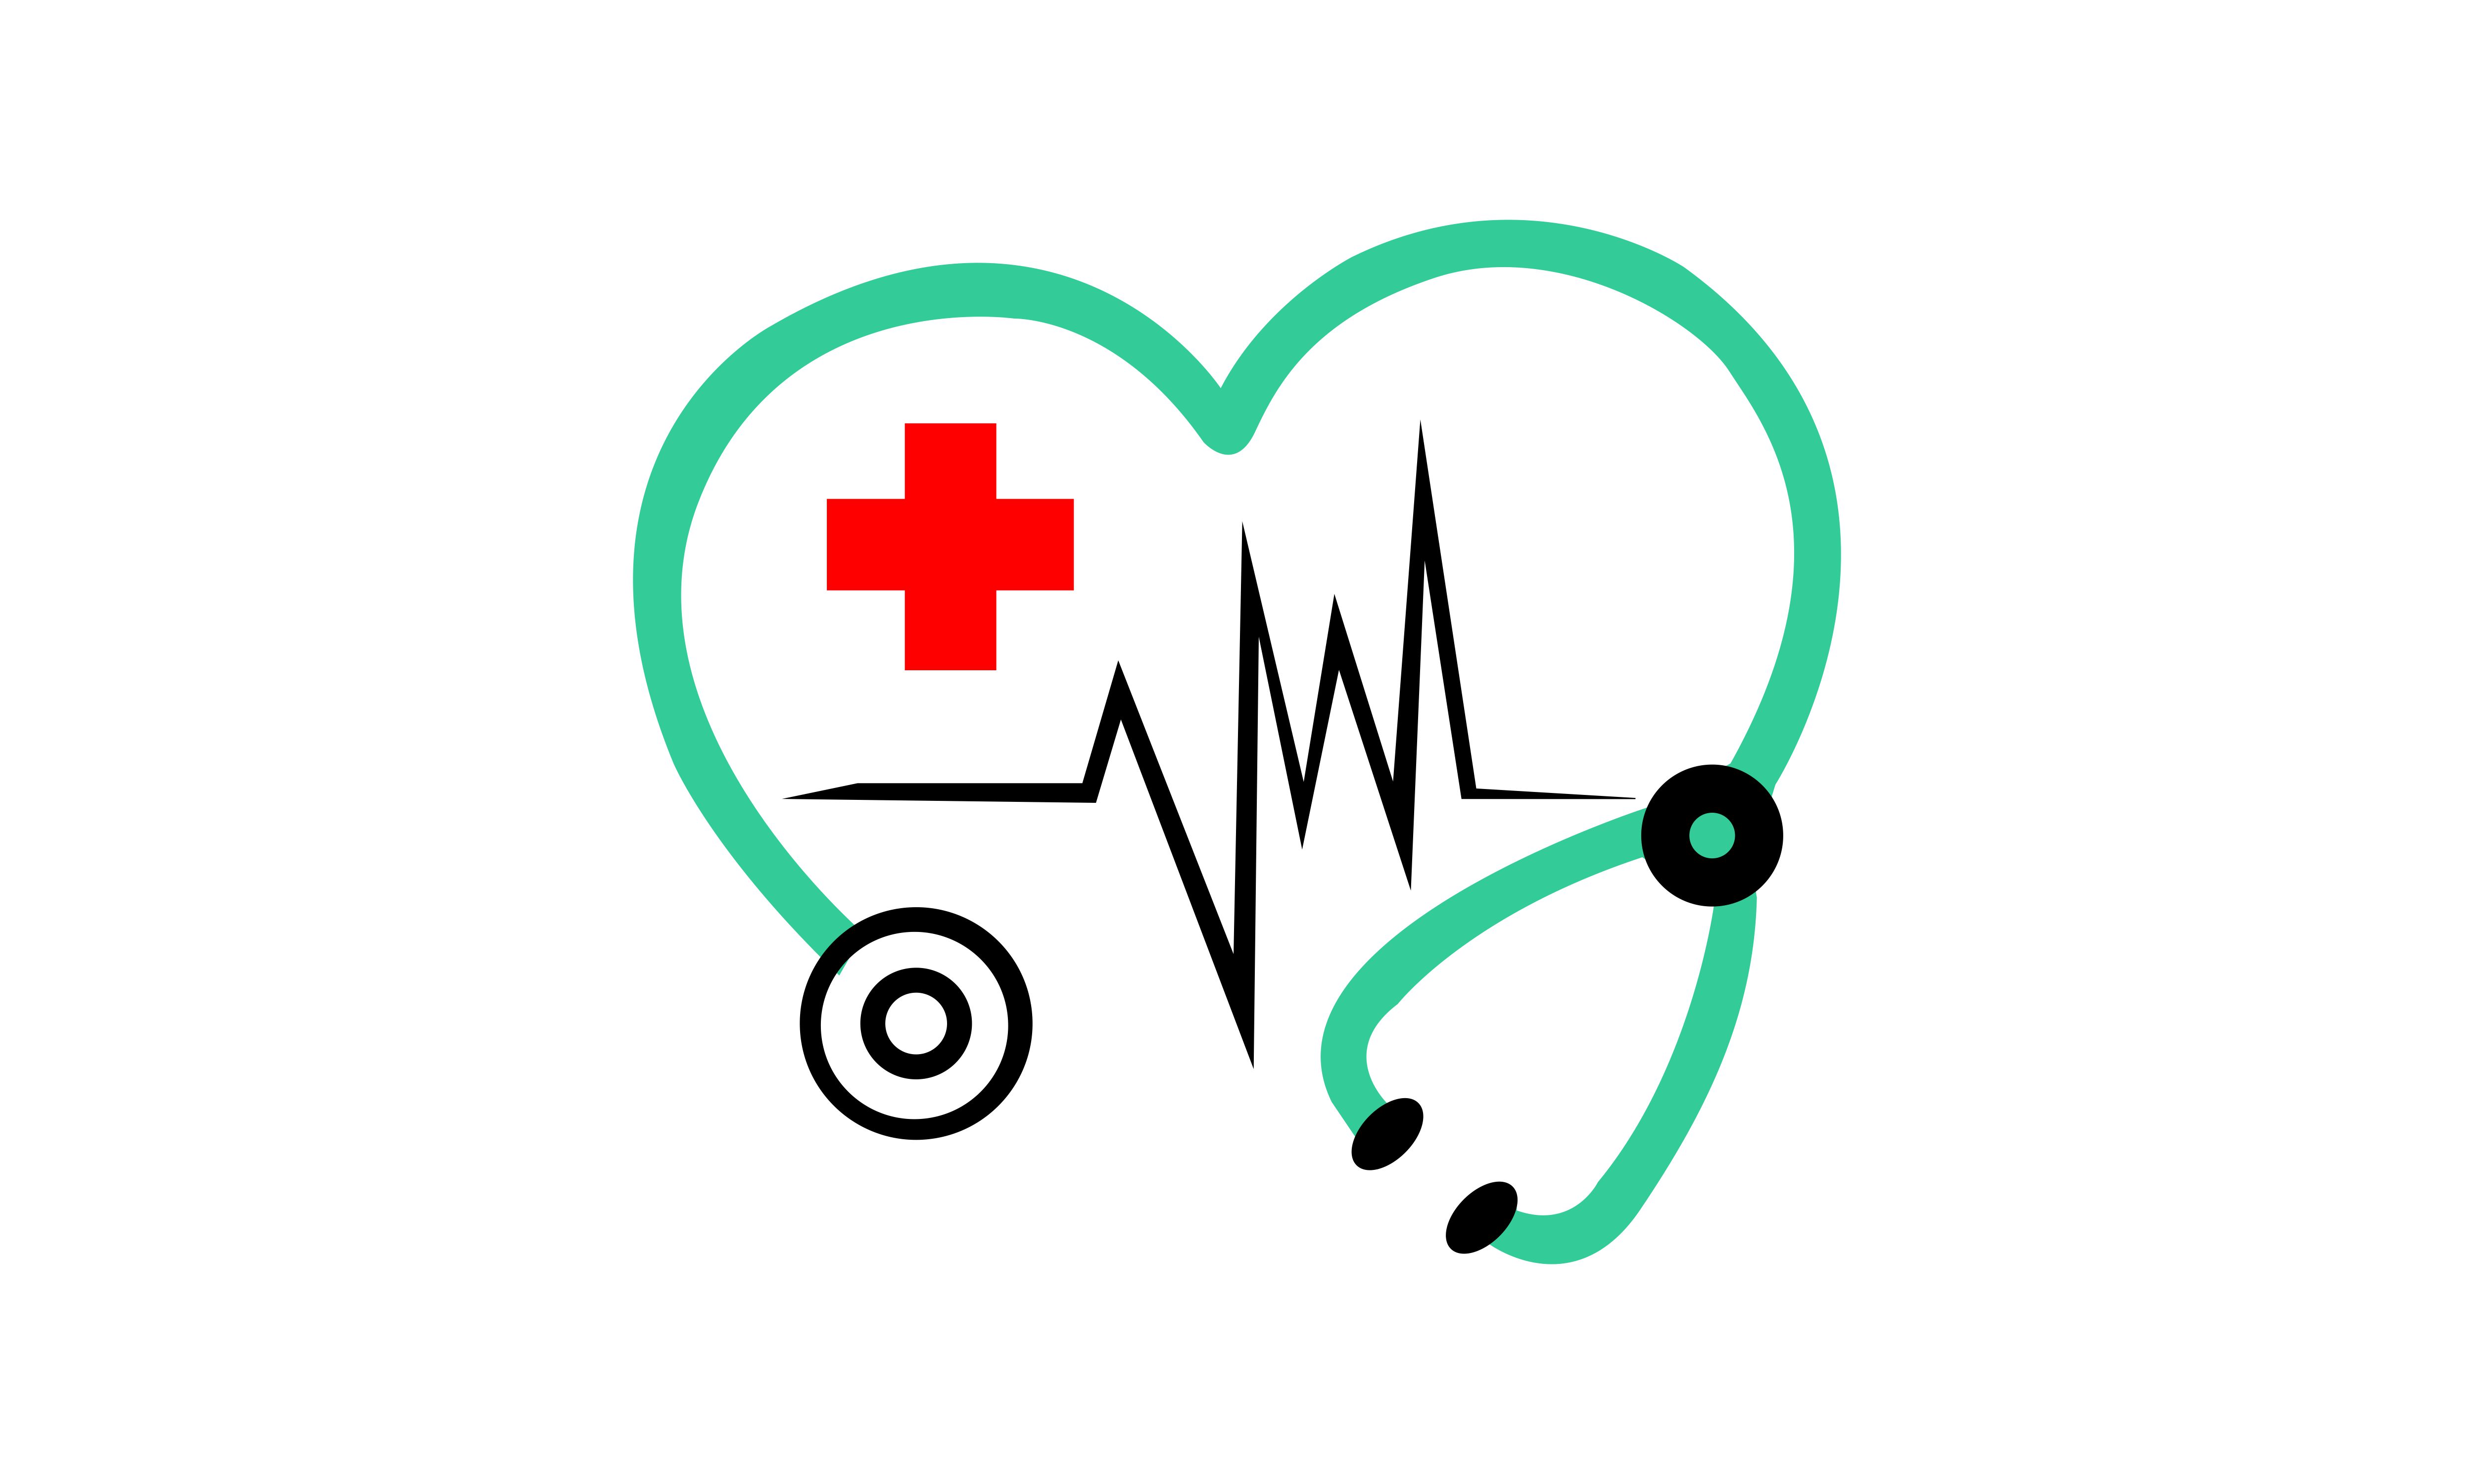 https://www.creativefabrica.com/wp-content/uploads/2020/03/08/Medical-stethoscope-heart-logo-Graphics-3403229-1.jpg